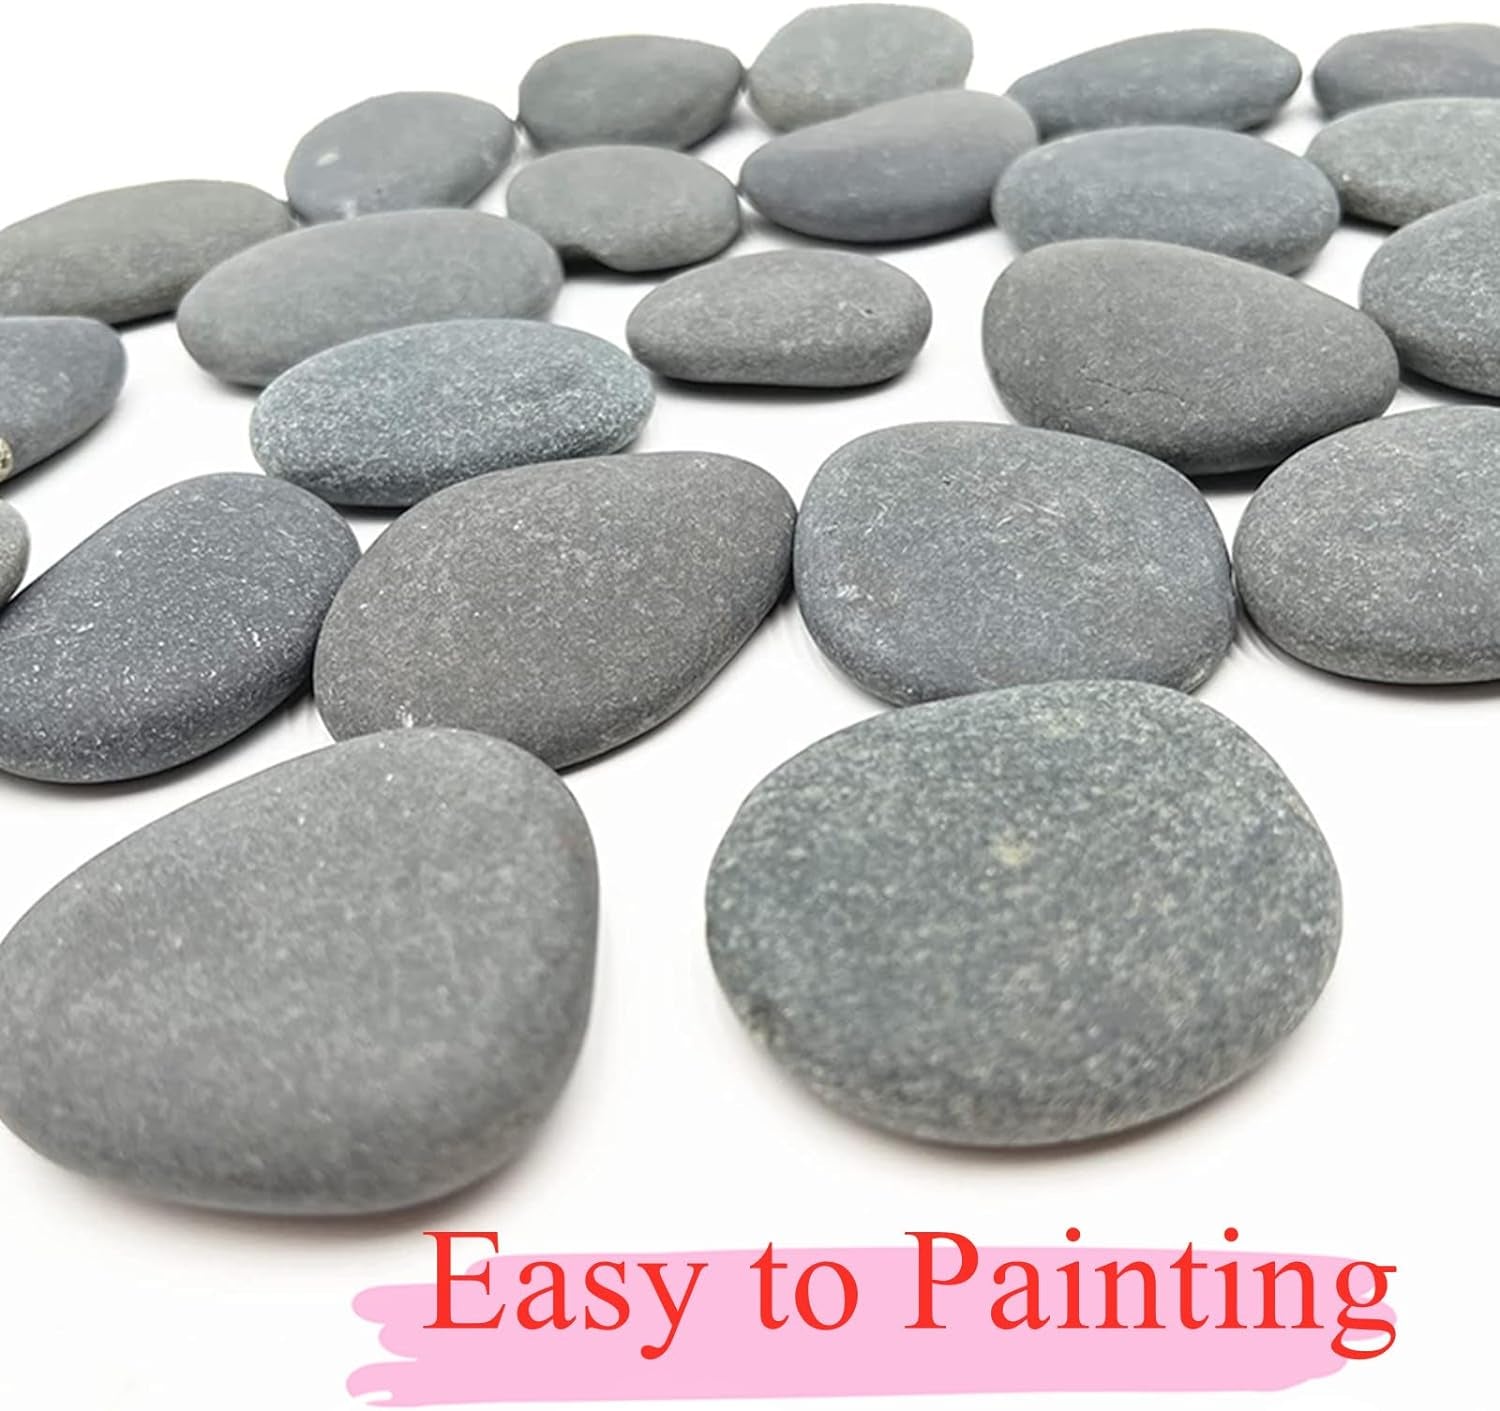 50PCS Painting Rocks, Natural DIY Rocks Flat & Smooth Kindness Rocks for Arts, Crafts, Decoration, Medium & Small Rocks for Painting ，1.5"-3"Hand Picked for Painting Rocks